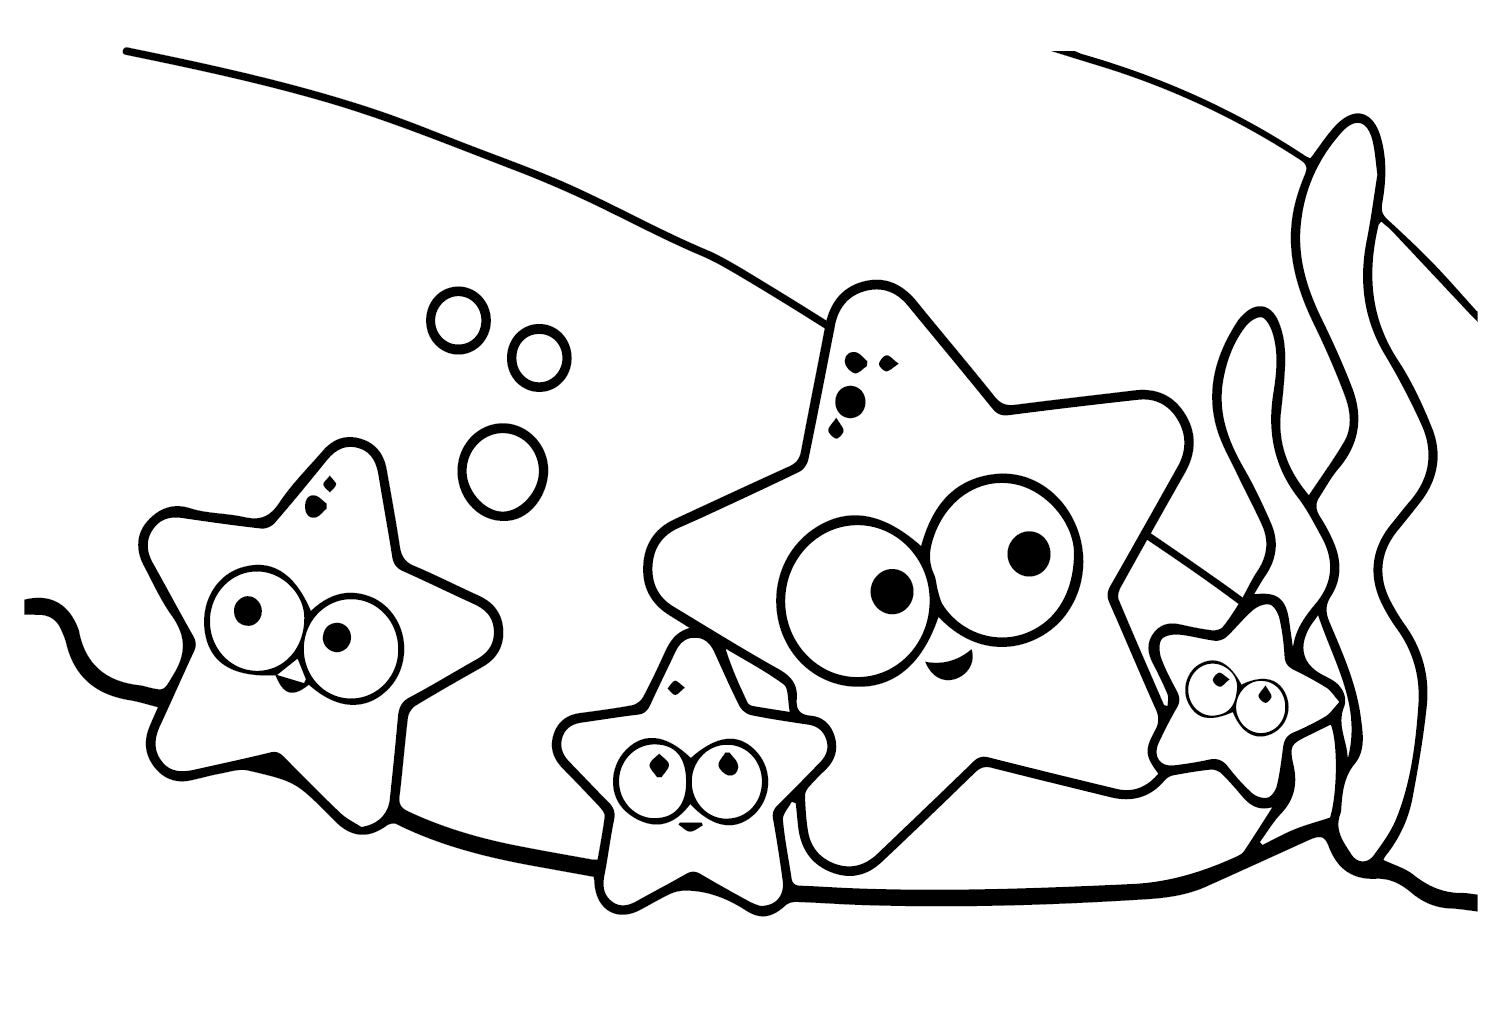 Estrela do mar fofa from Starfish